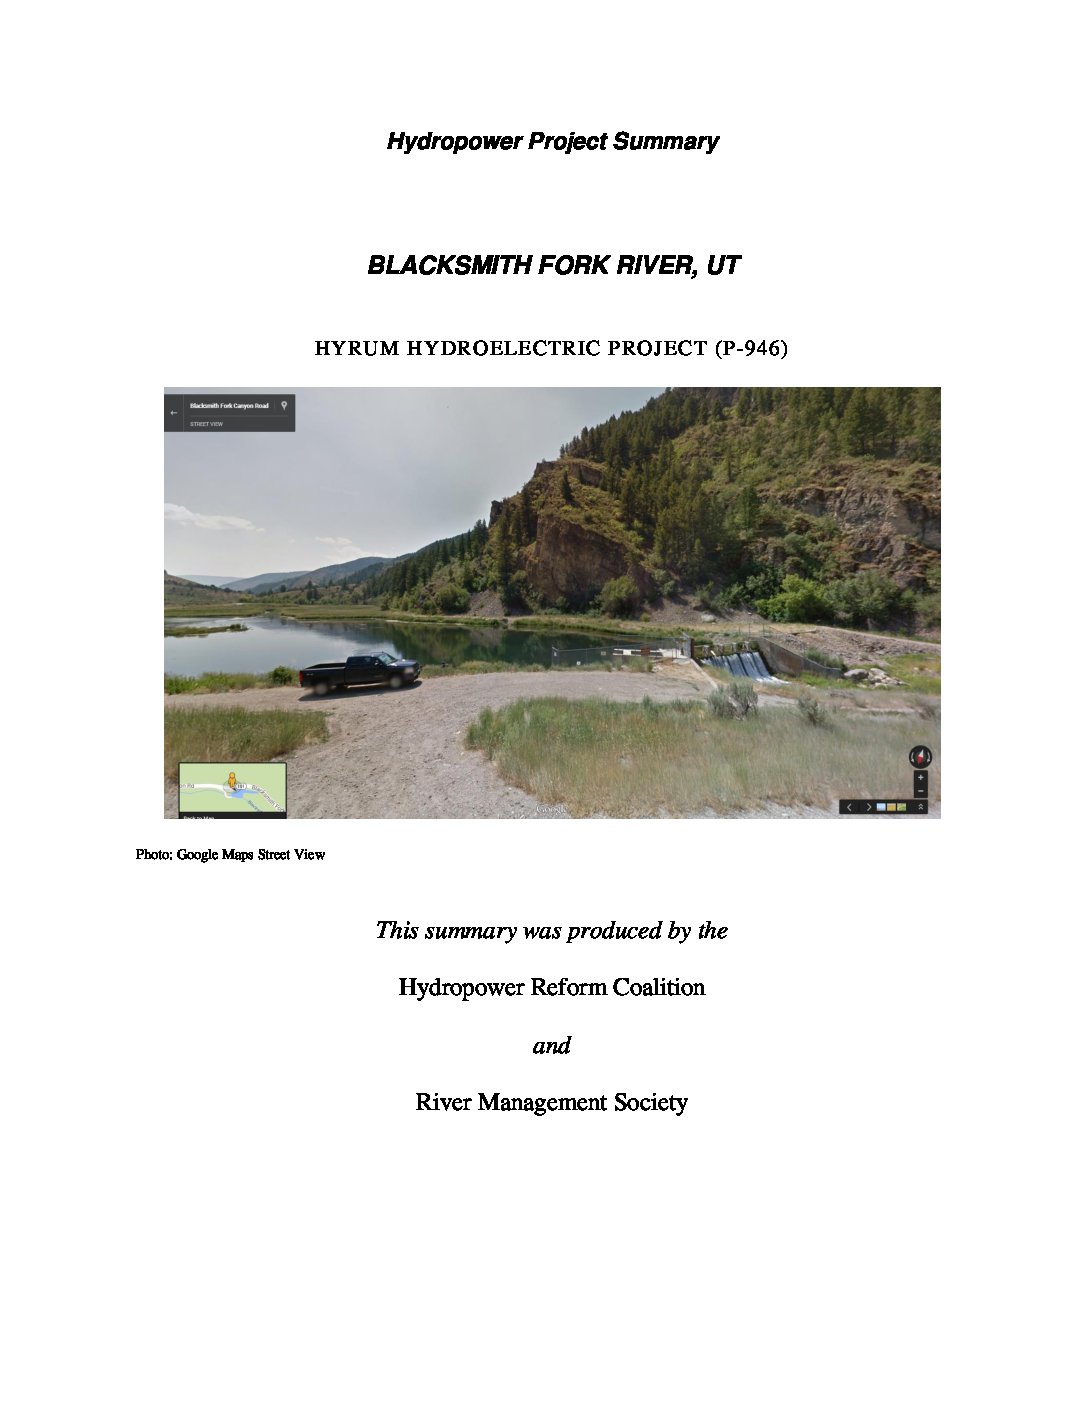 Hyrum Project, Blacksmith River, Utah